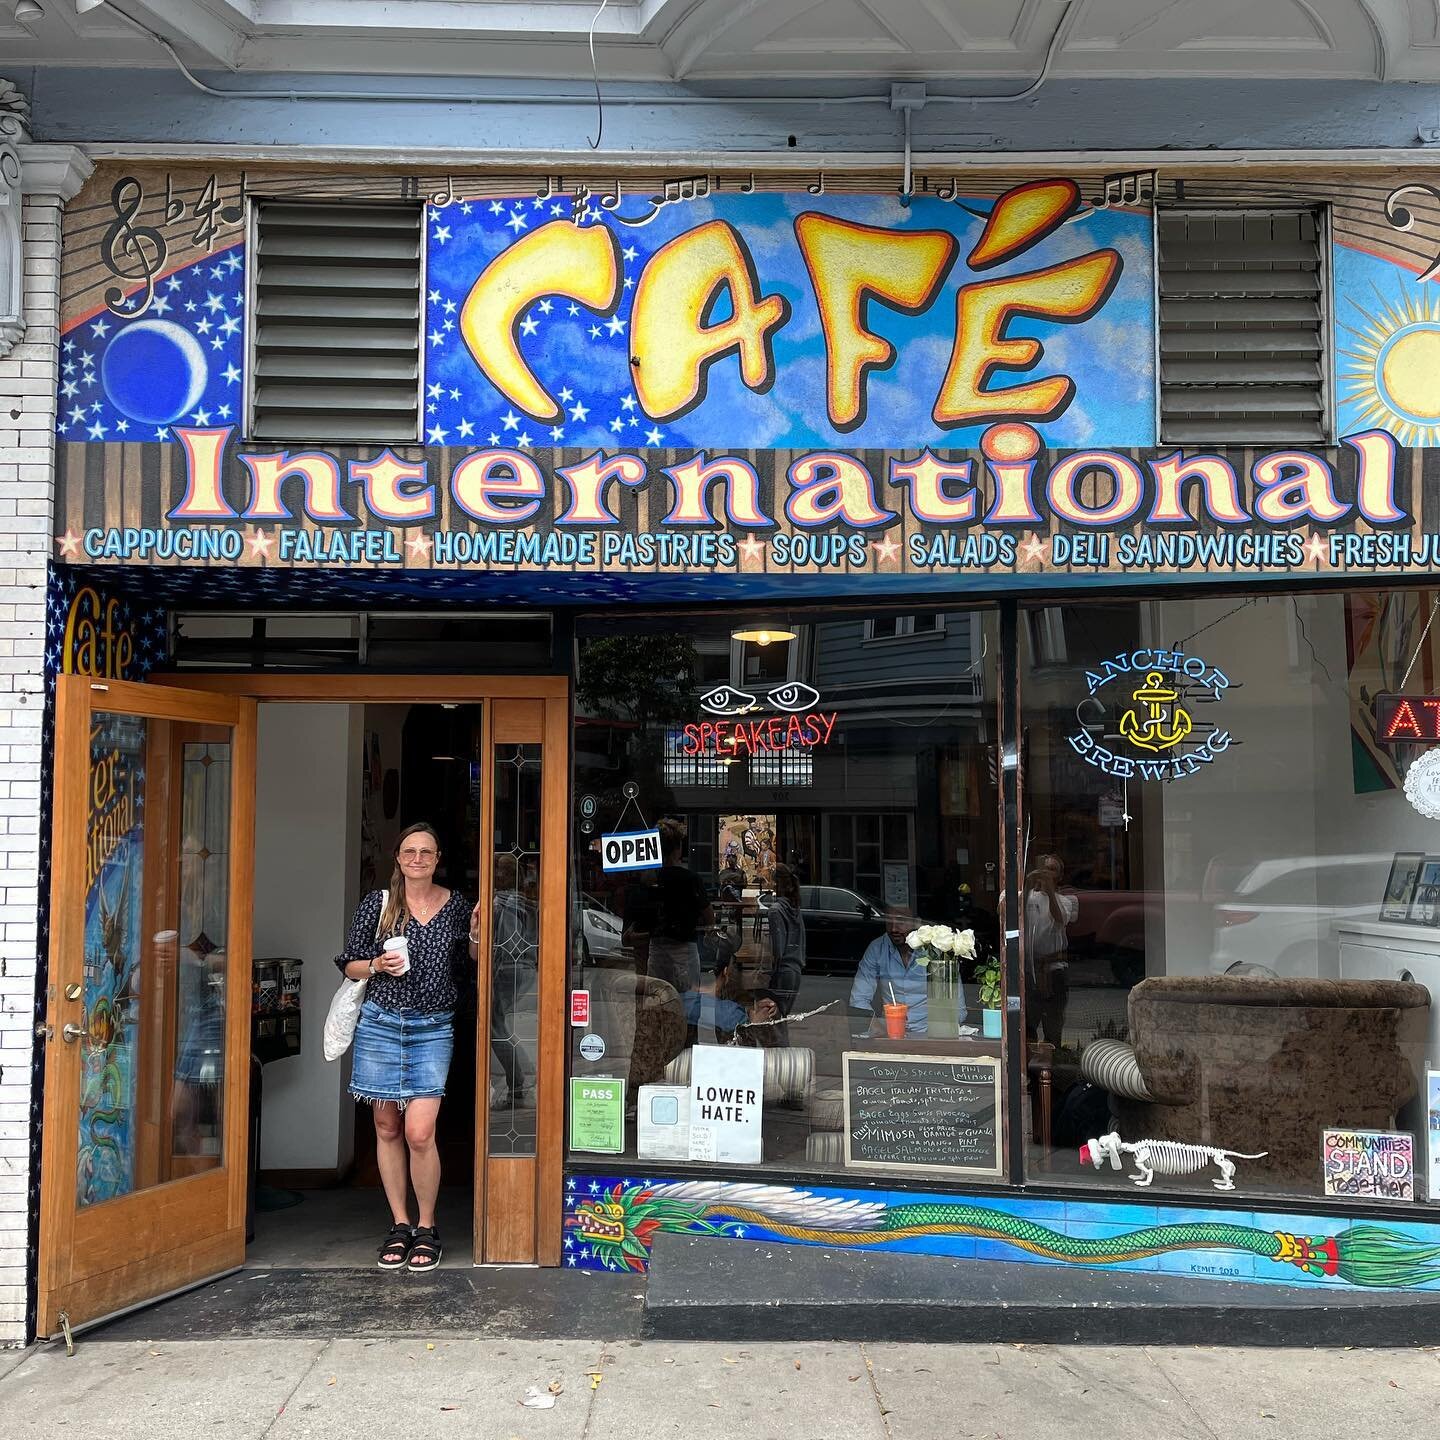 The greatest caf&eacute; in San Fransisco🙌 Best atmosphere, music and service! @cafeintl 
.
.
#sanfrancisco #haightstreet #haightashbury #cafeinternational #lovesanfrancisco #bestpeople